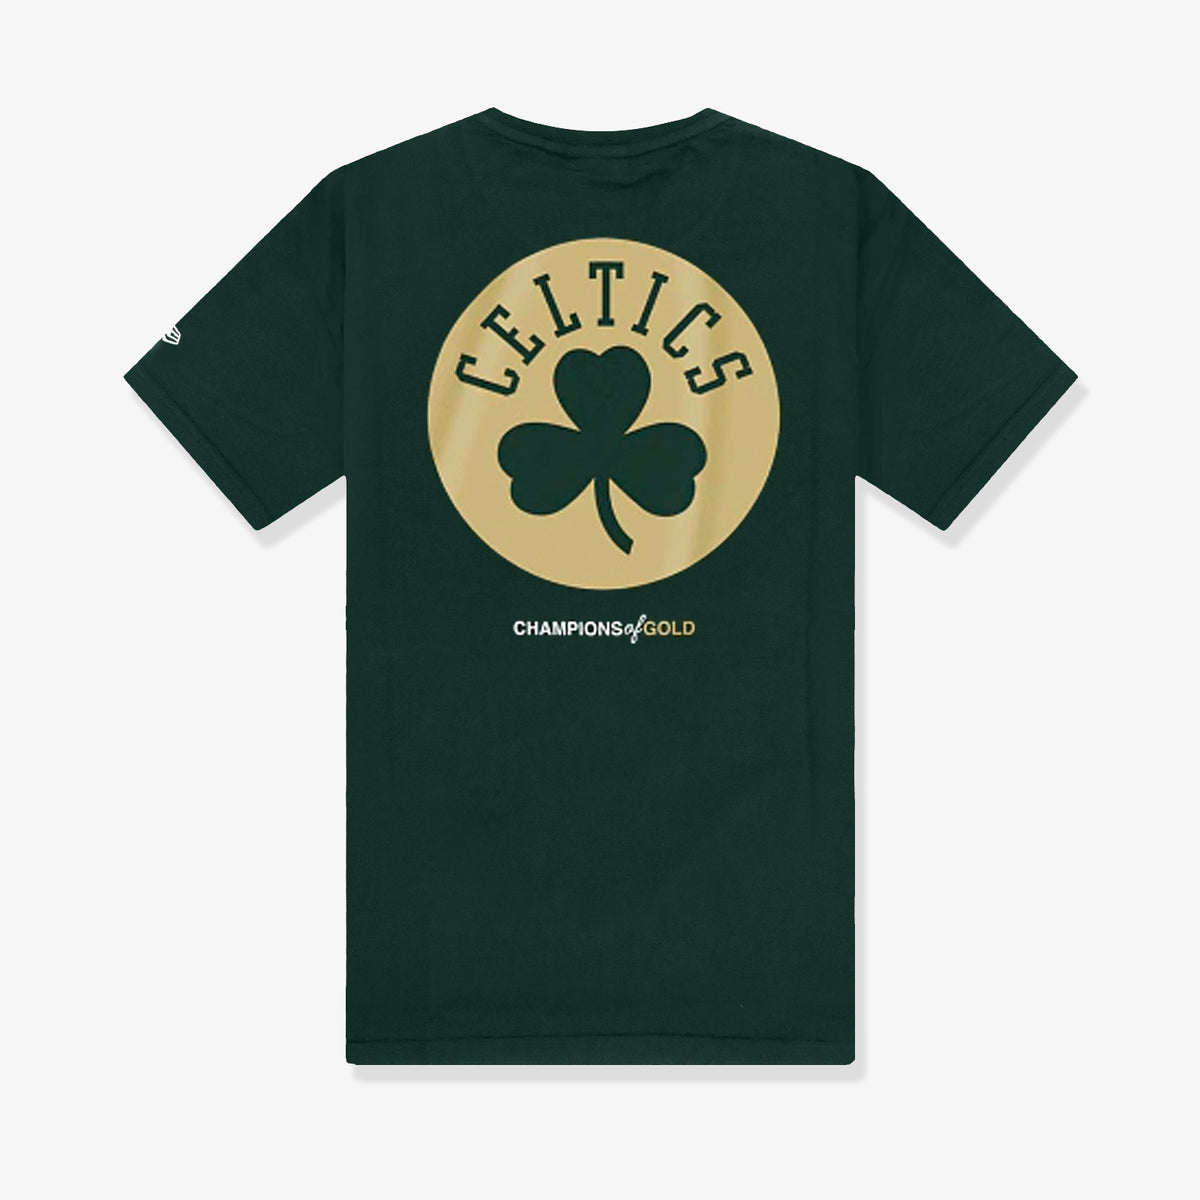 Boston Celtics City Edition T-Shirt - Green